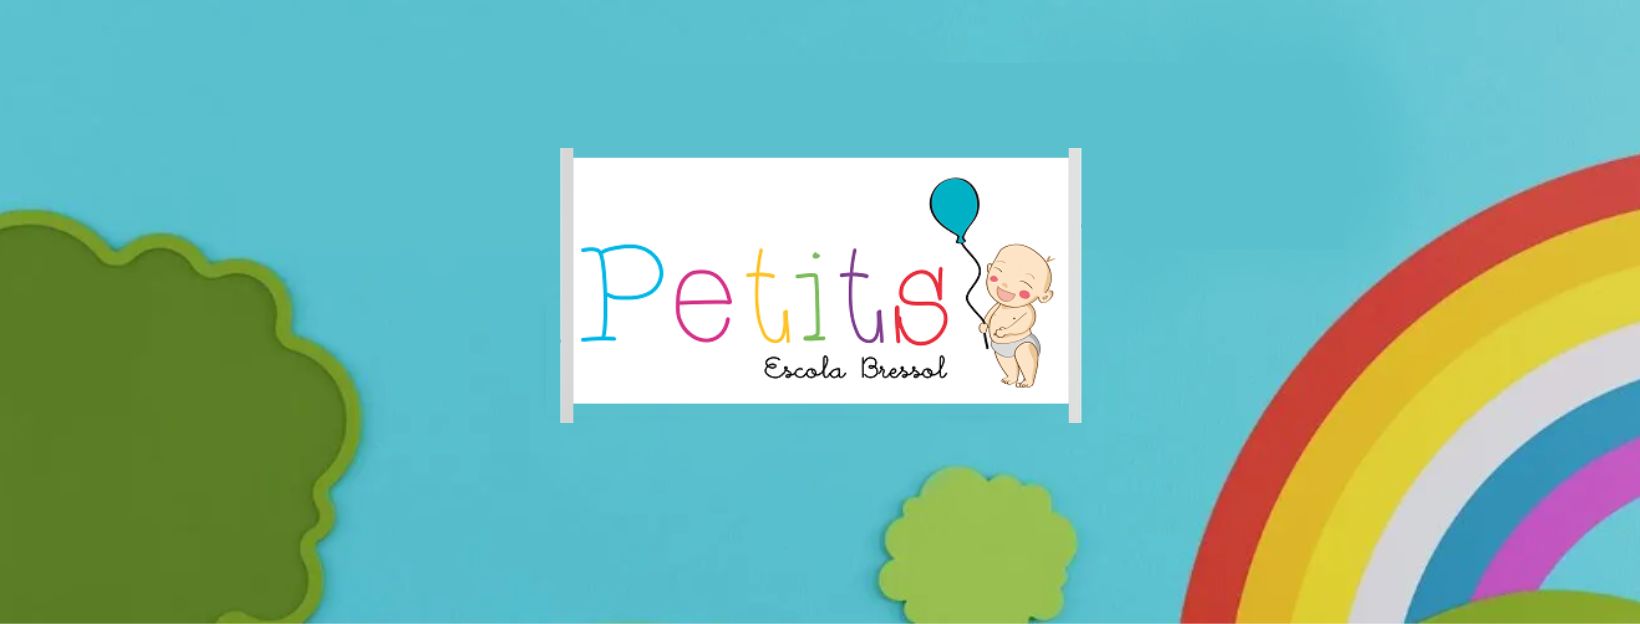 Web page for Bressol Petits School